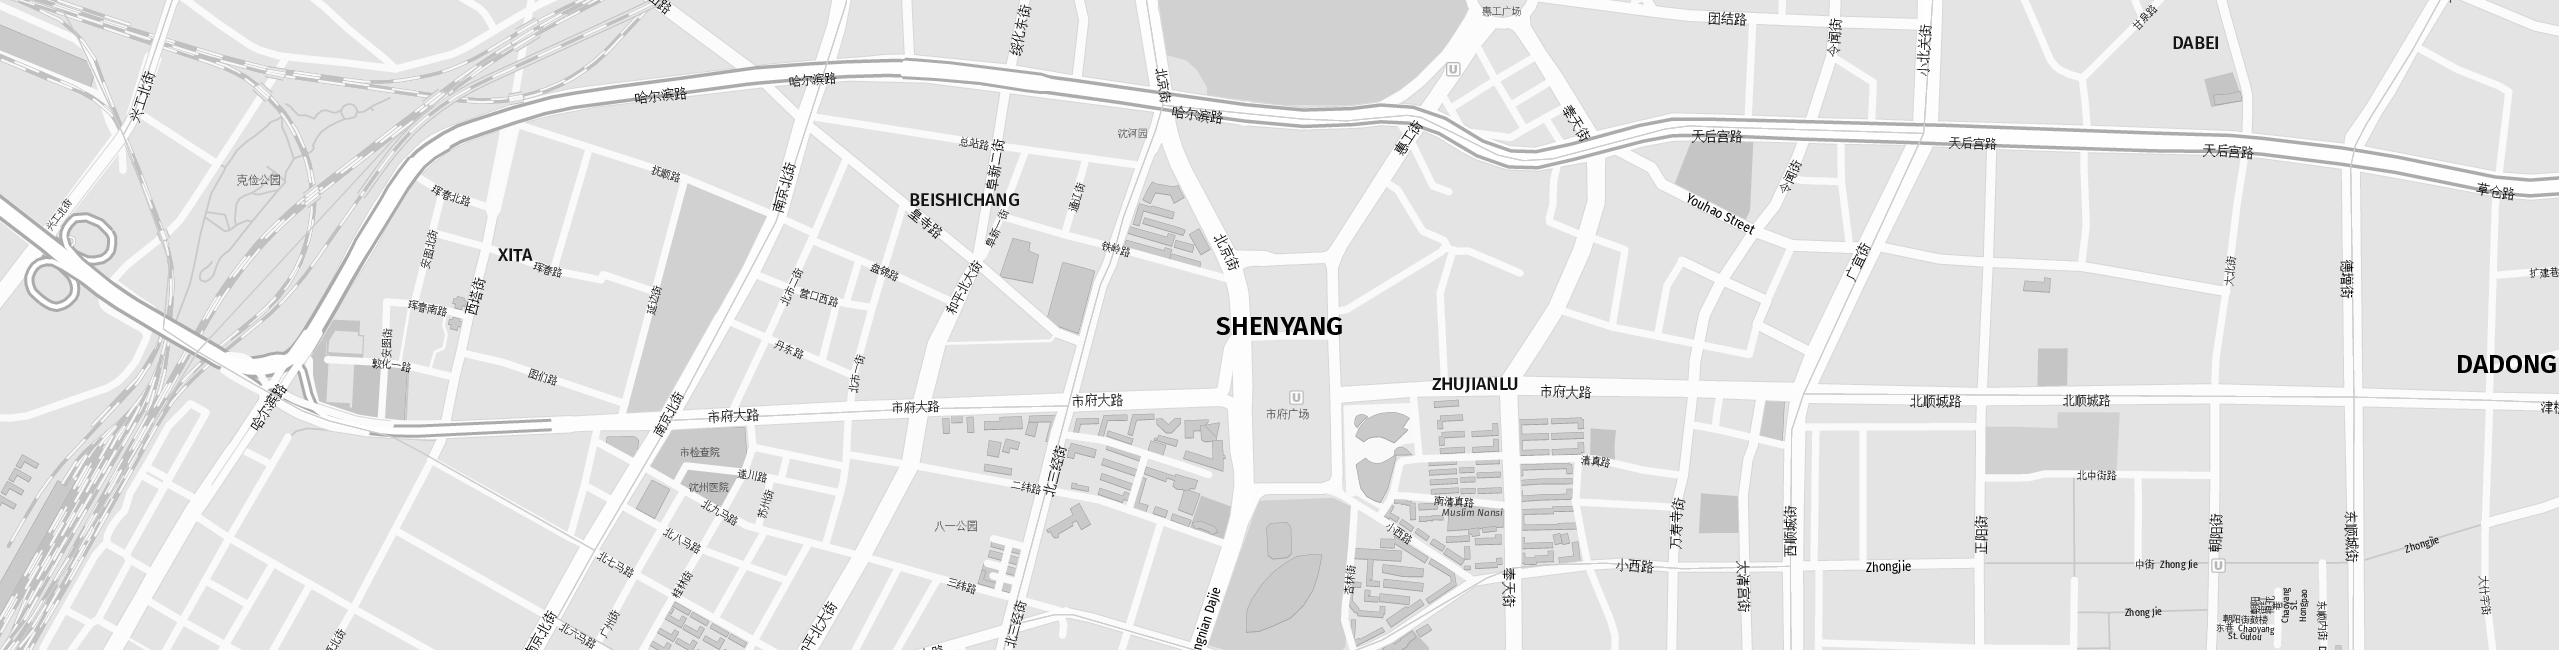 Stadtplan Shenyang zum Downloaden.